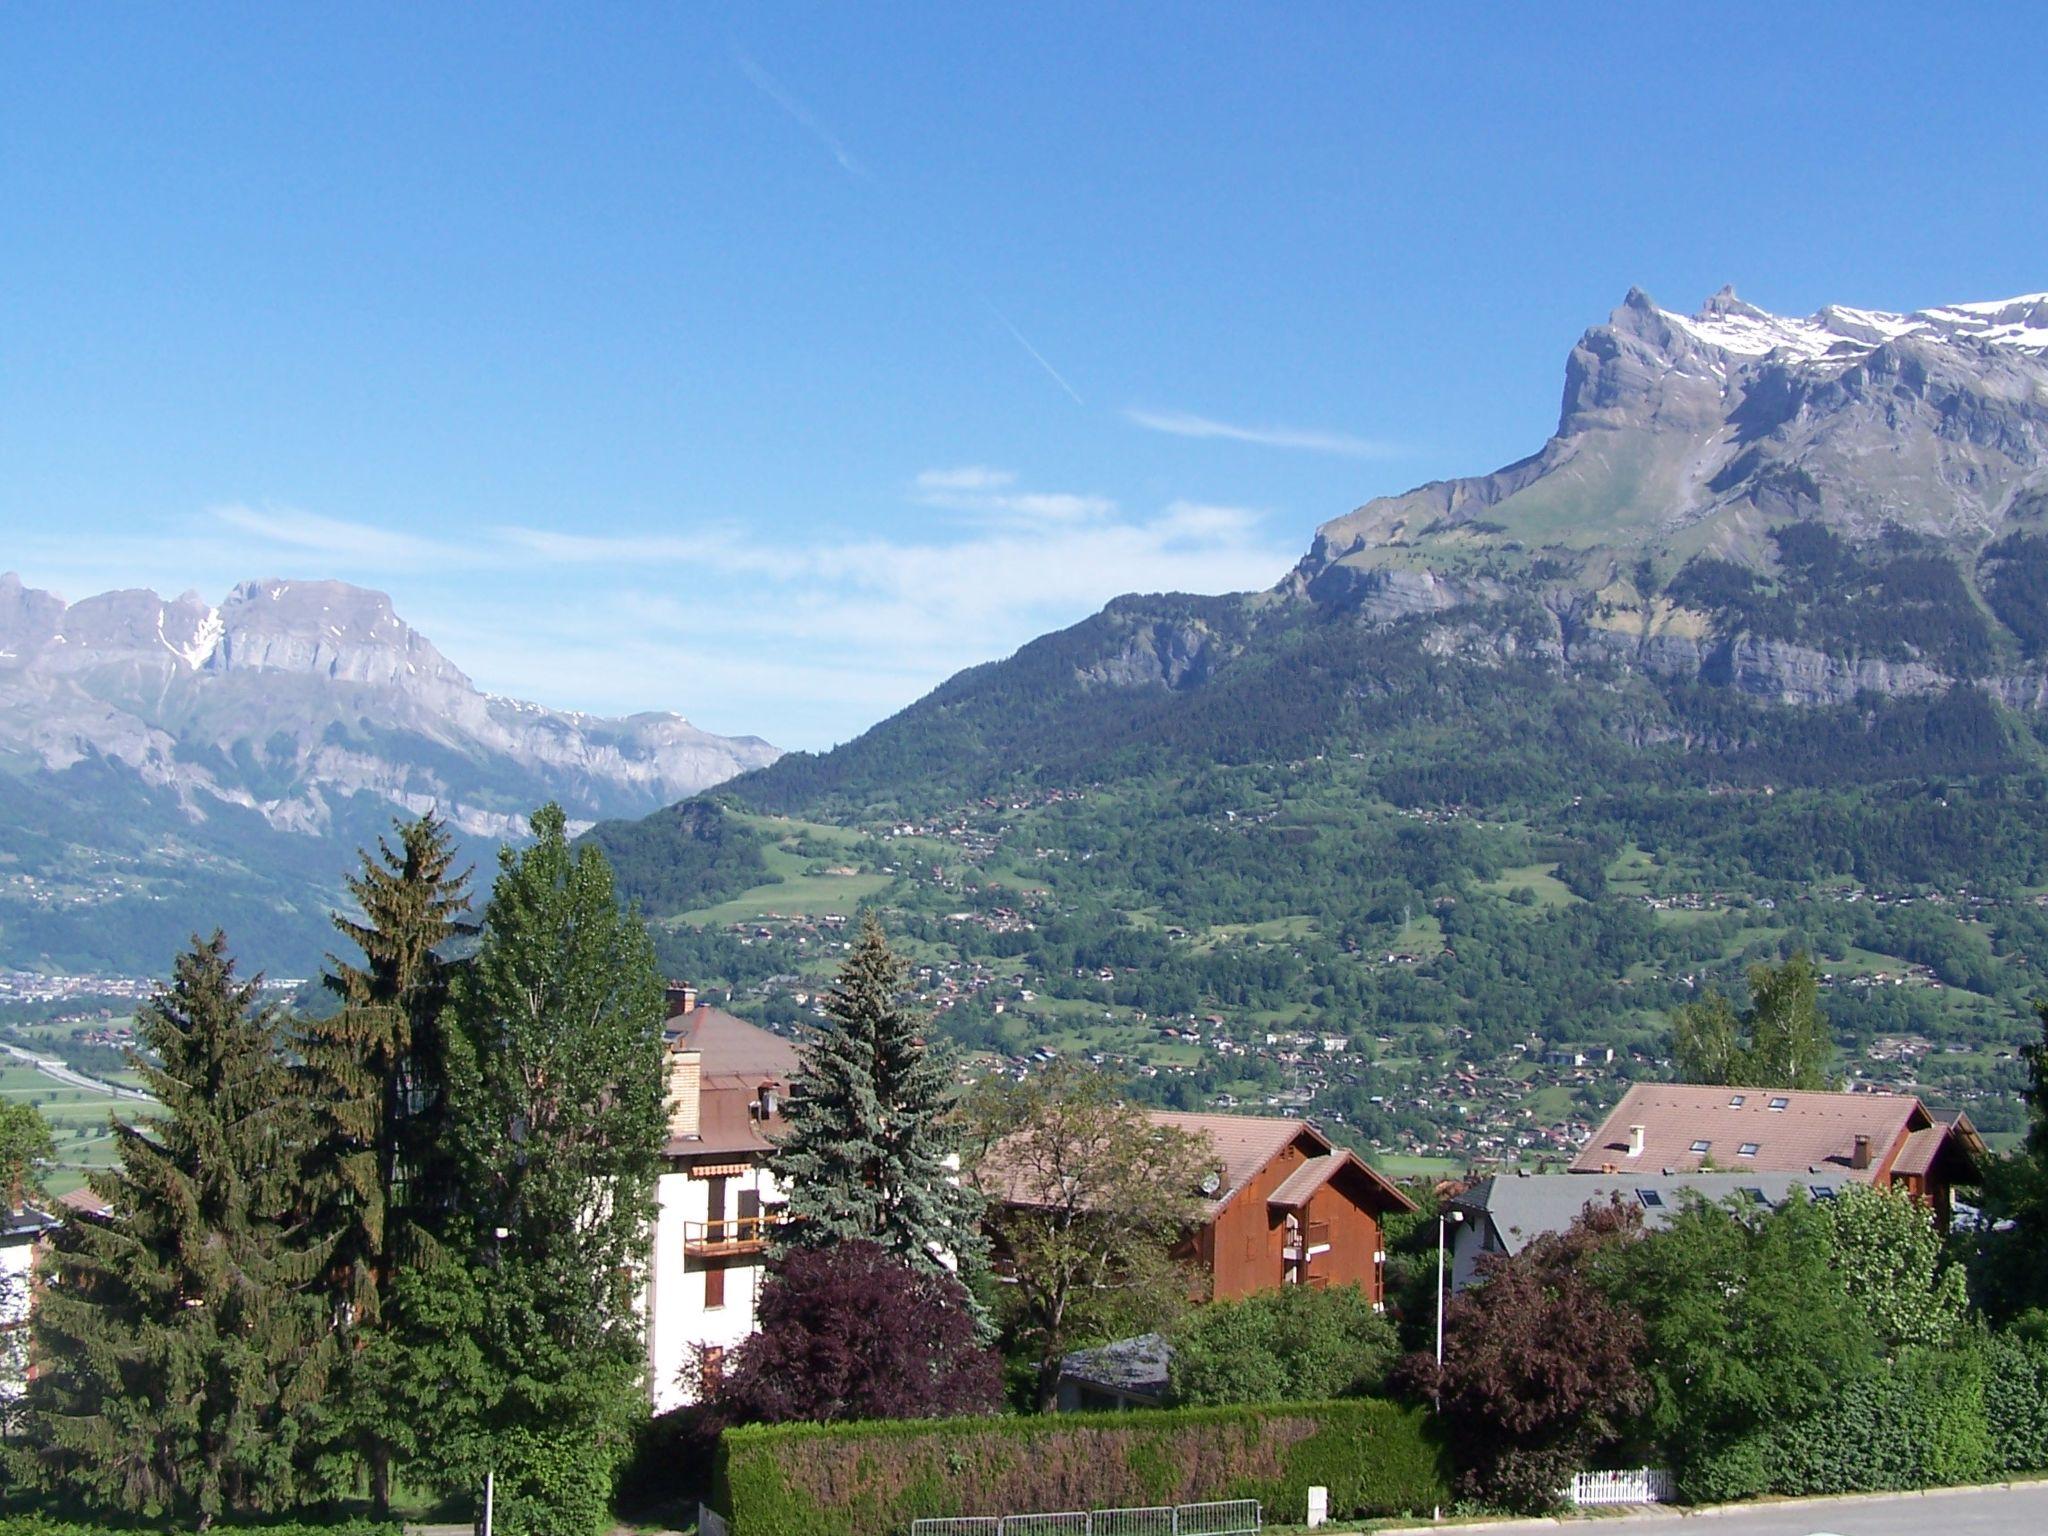 Foto 1 - Apartment in Saint-Gervais-les-Bains mit blick auf die berge